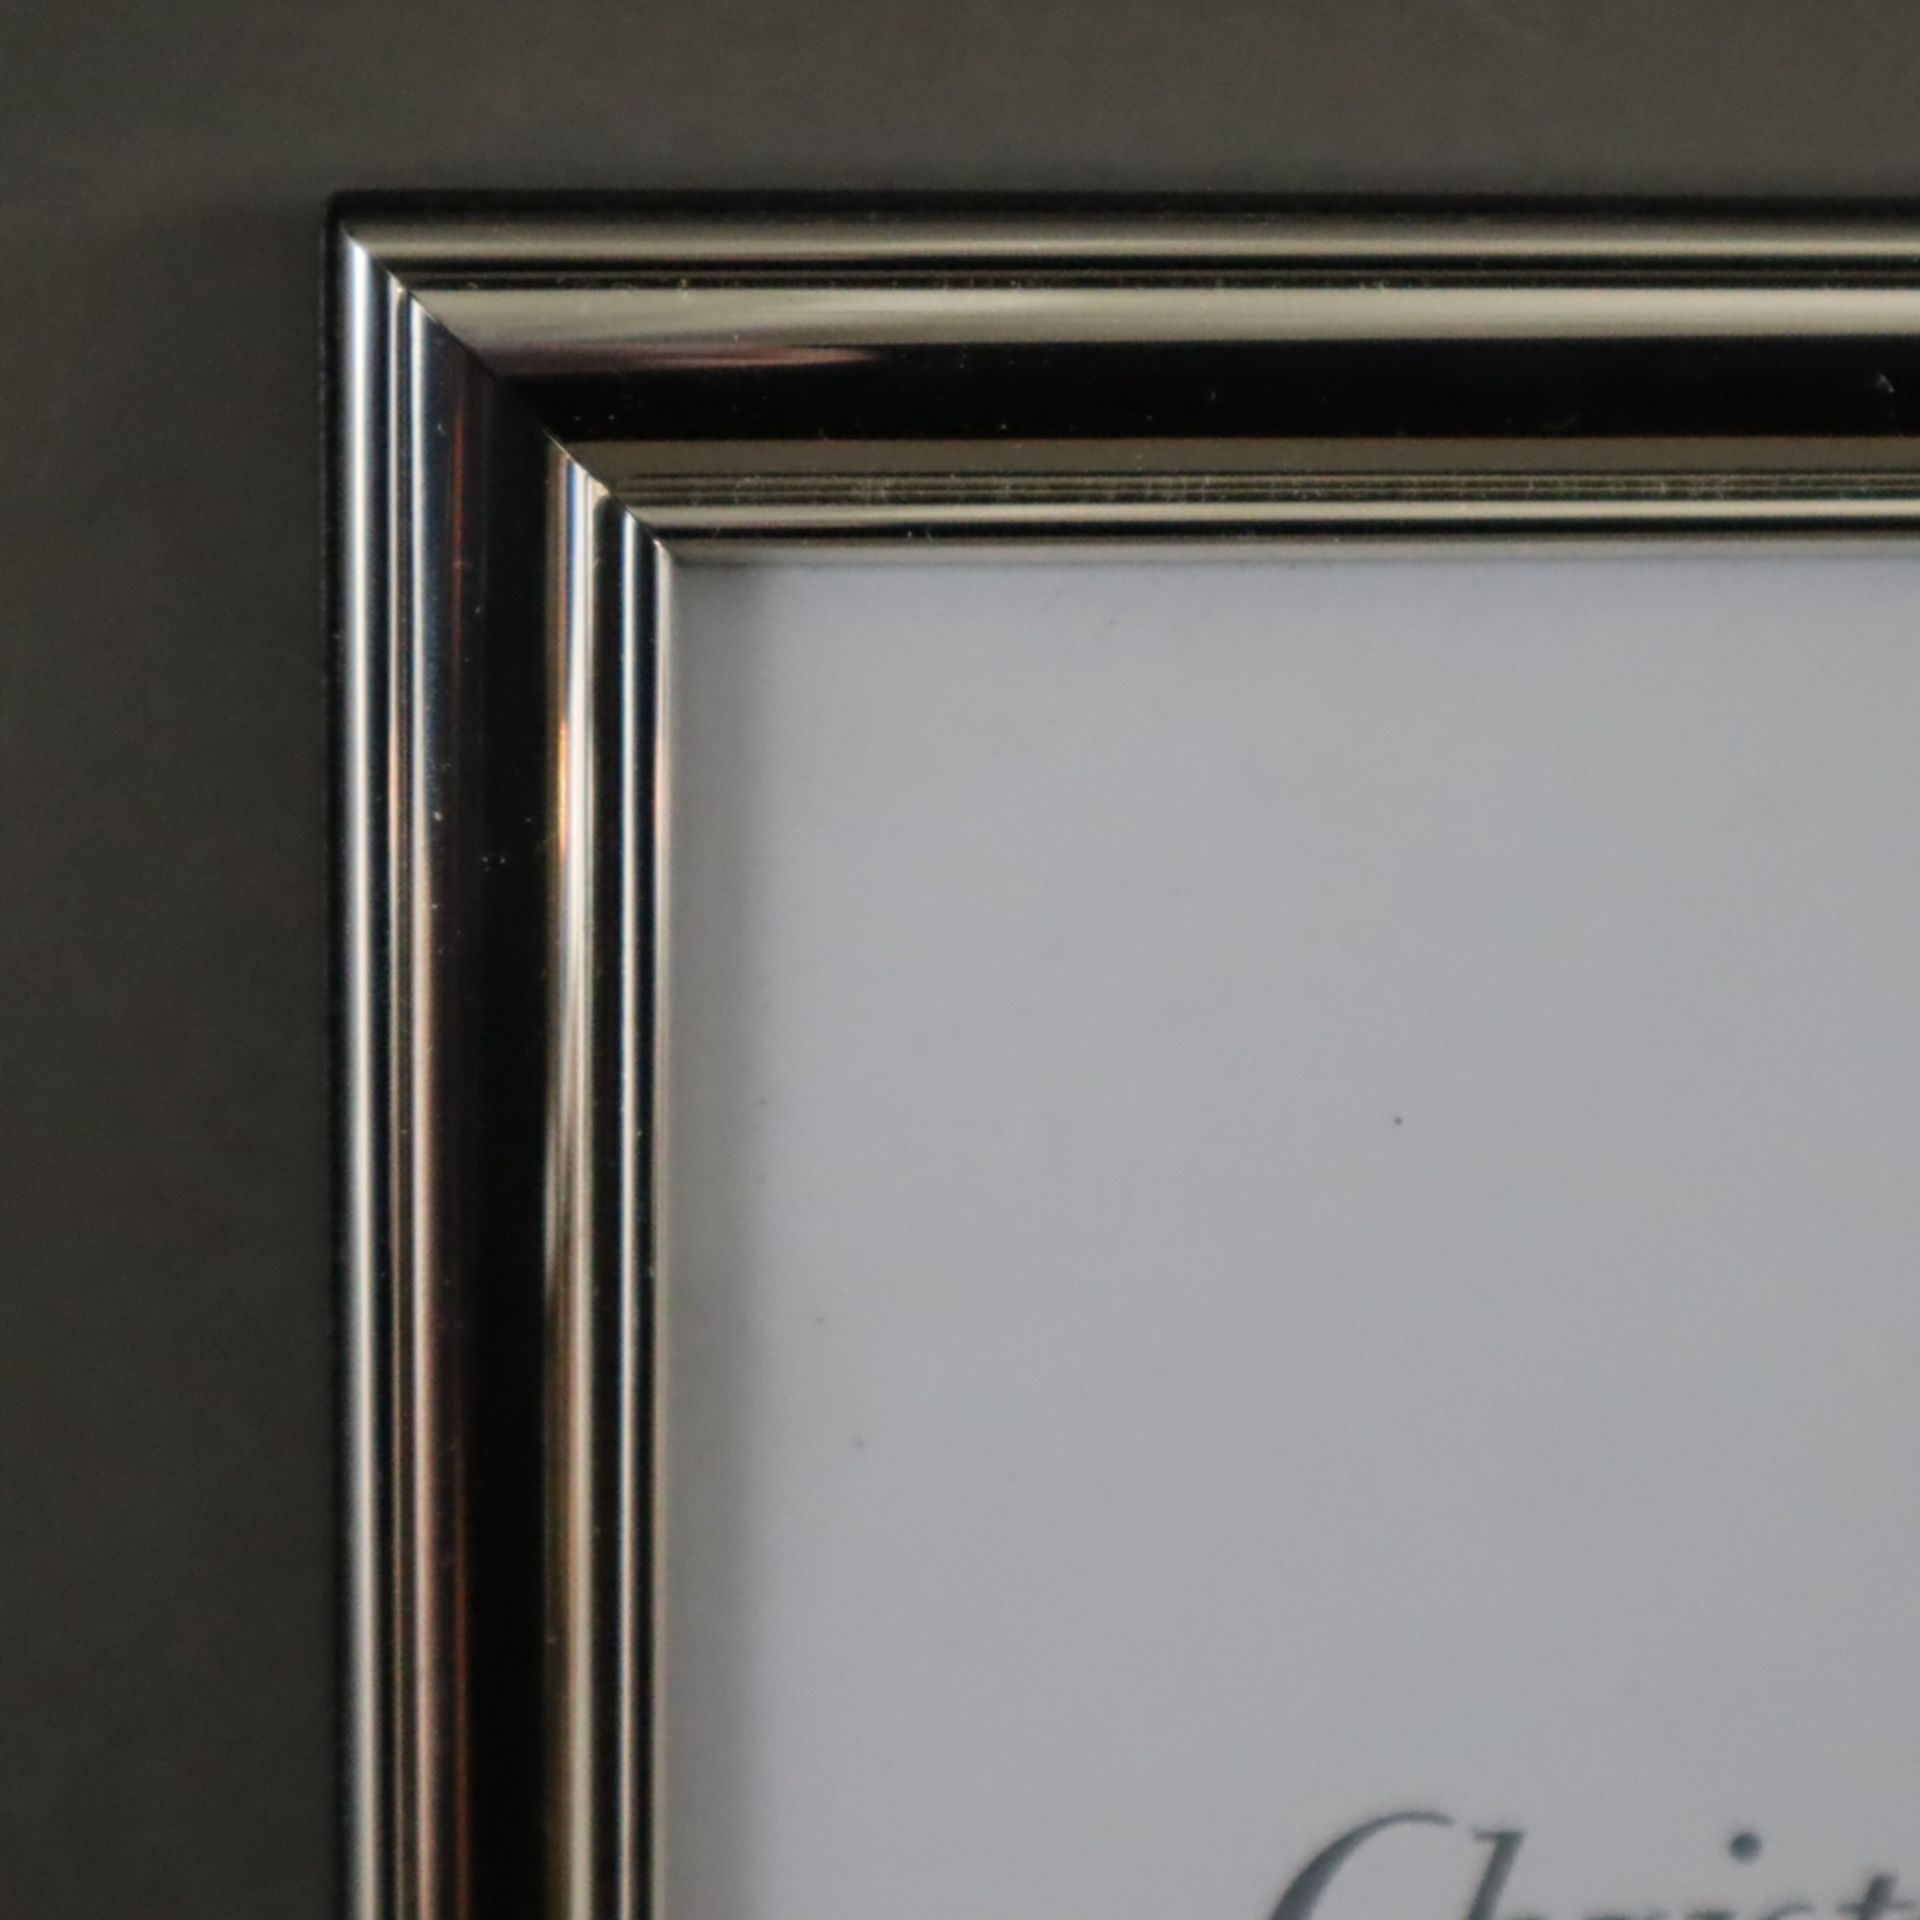 Christofle-Fotorahmen - 925er Silber, rechteckige Form, profilierter Rahmen, punziert: 925 CHRISTOF - Image 2 of 7